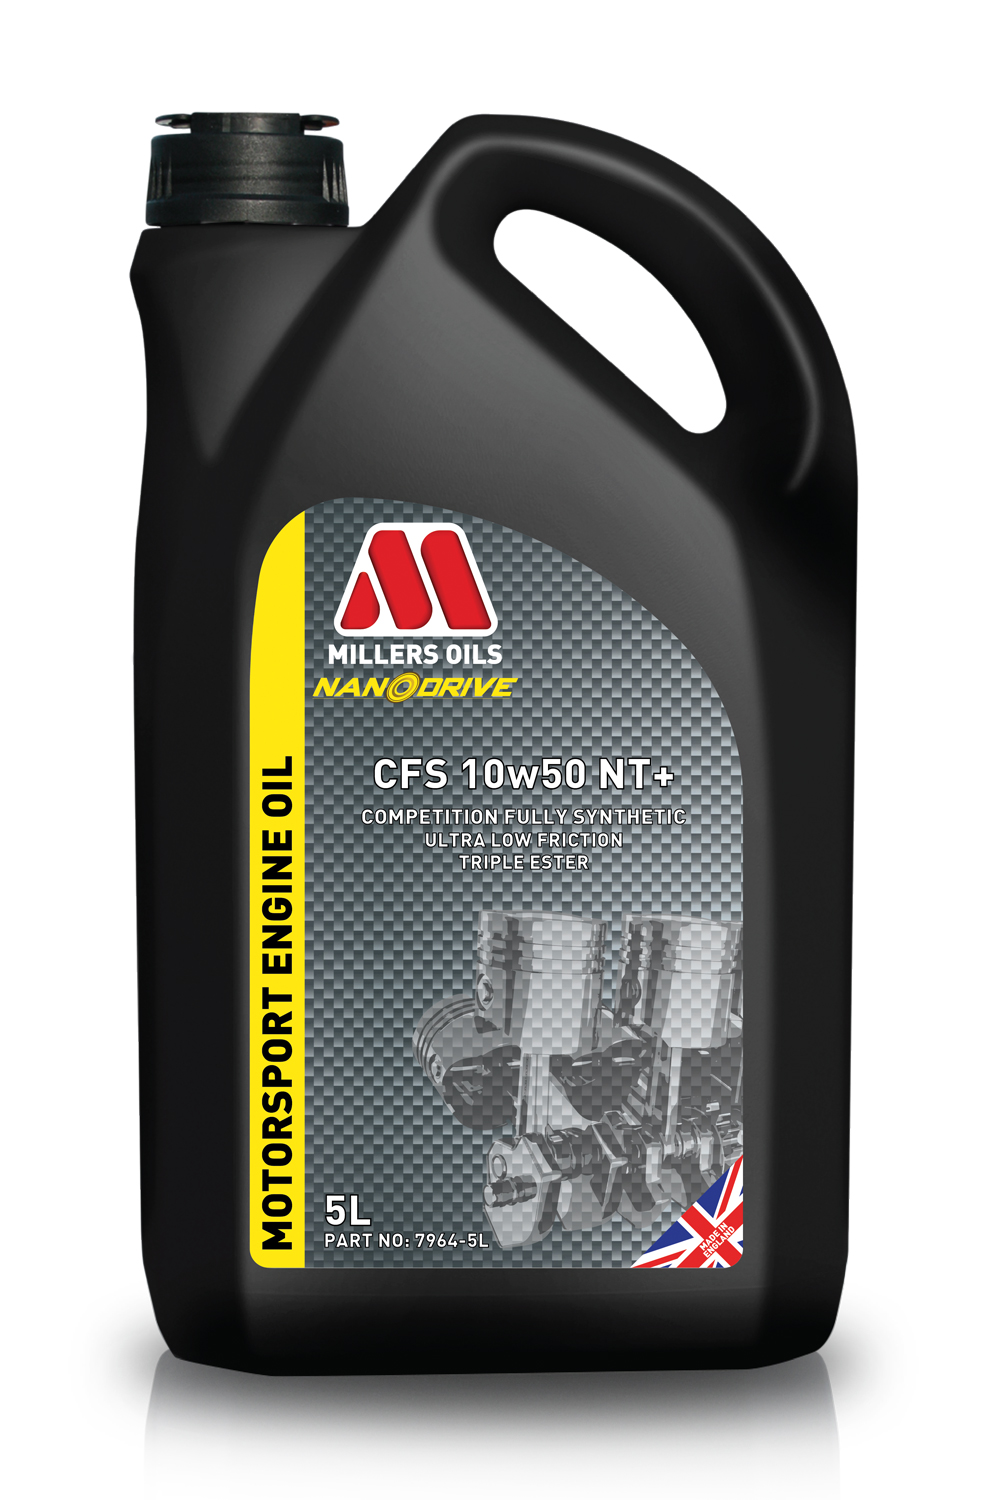 Millers Oils Nano Drive Motoröl CFS 10W-50 NT+